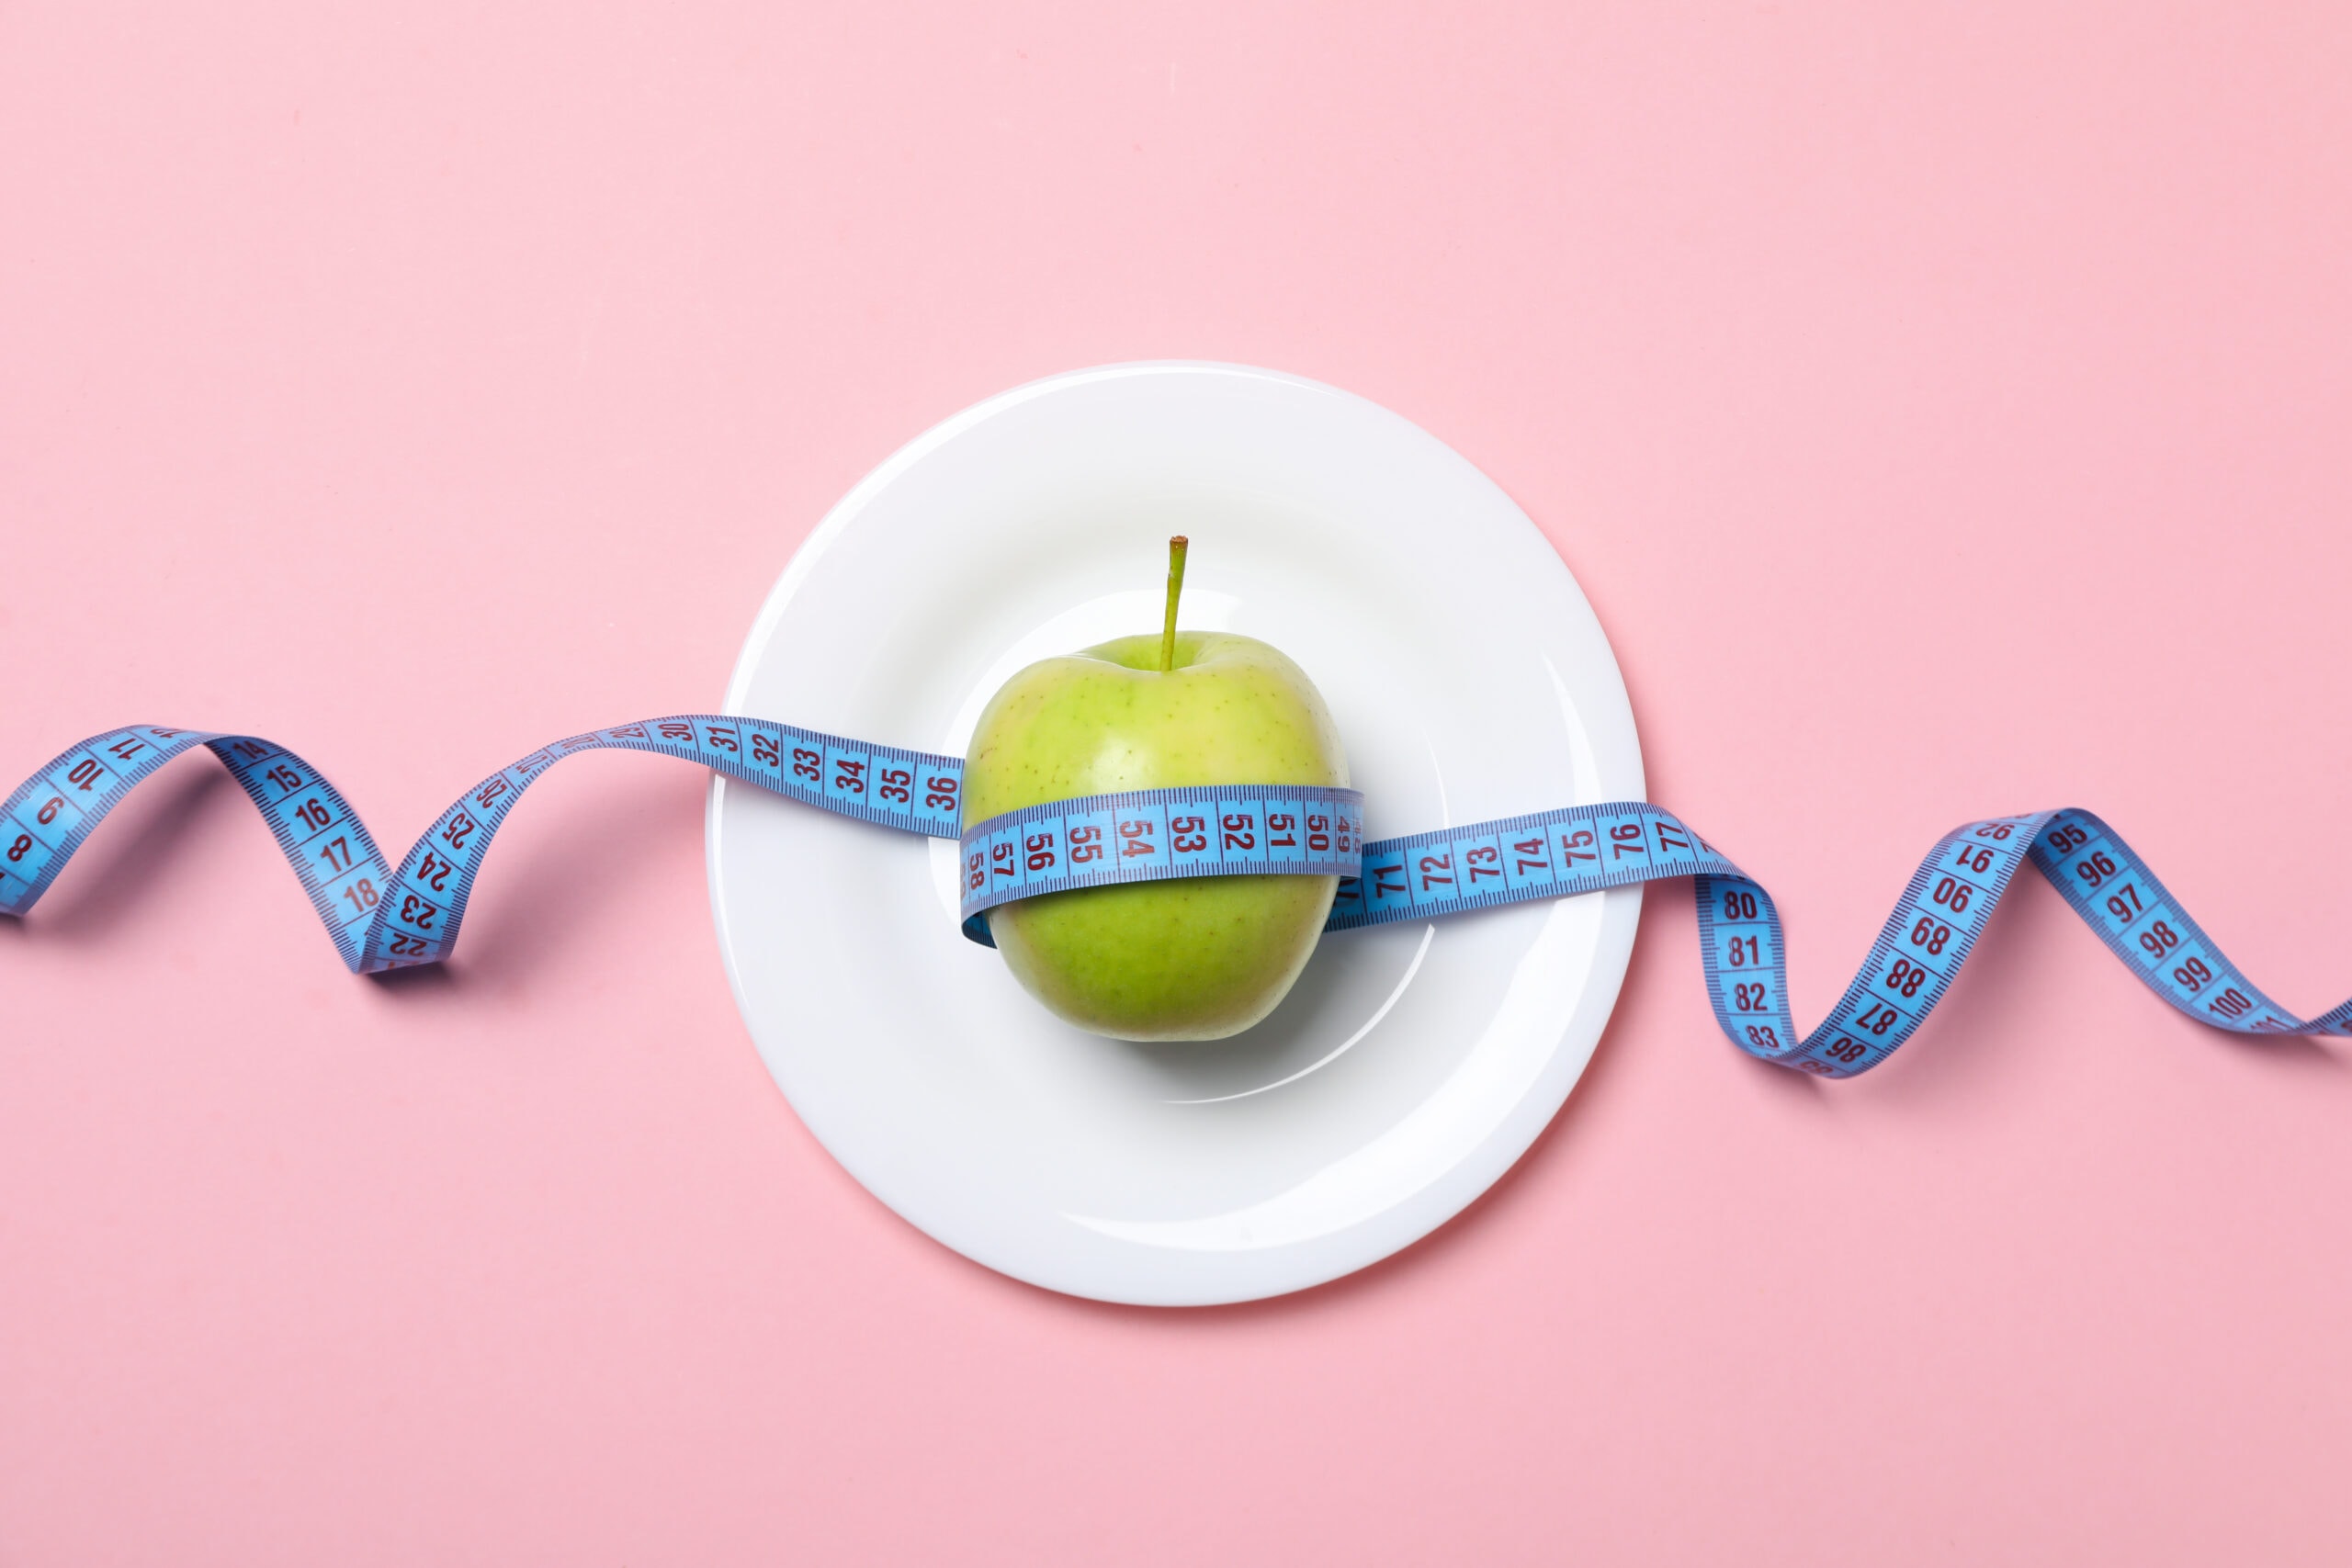 Hoeveel val je af als je niet eet appel op leeg bord